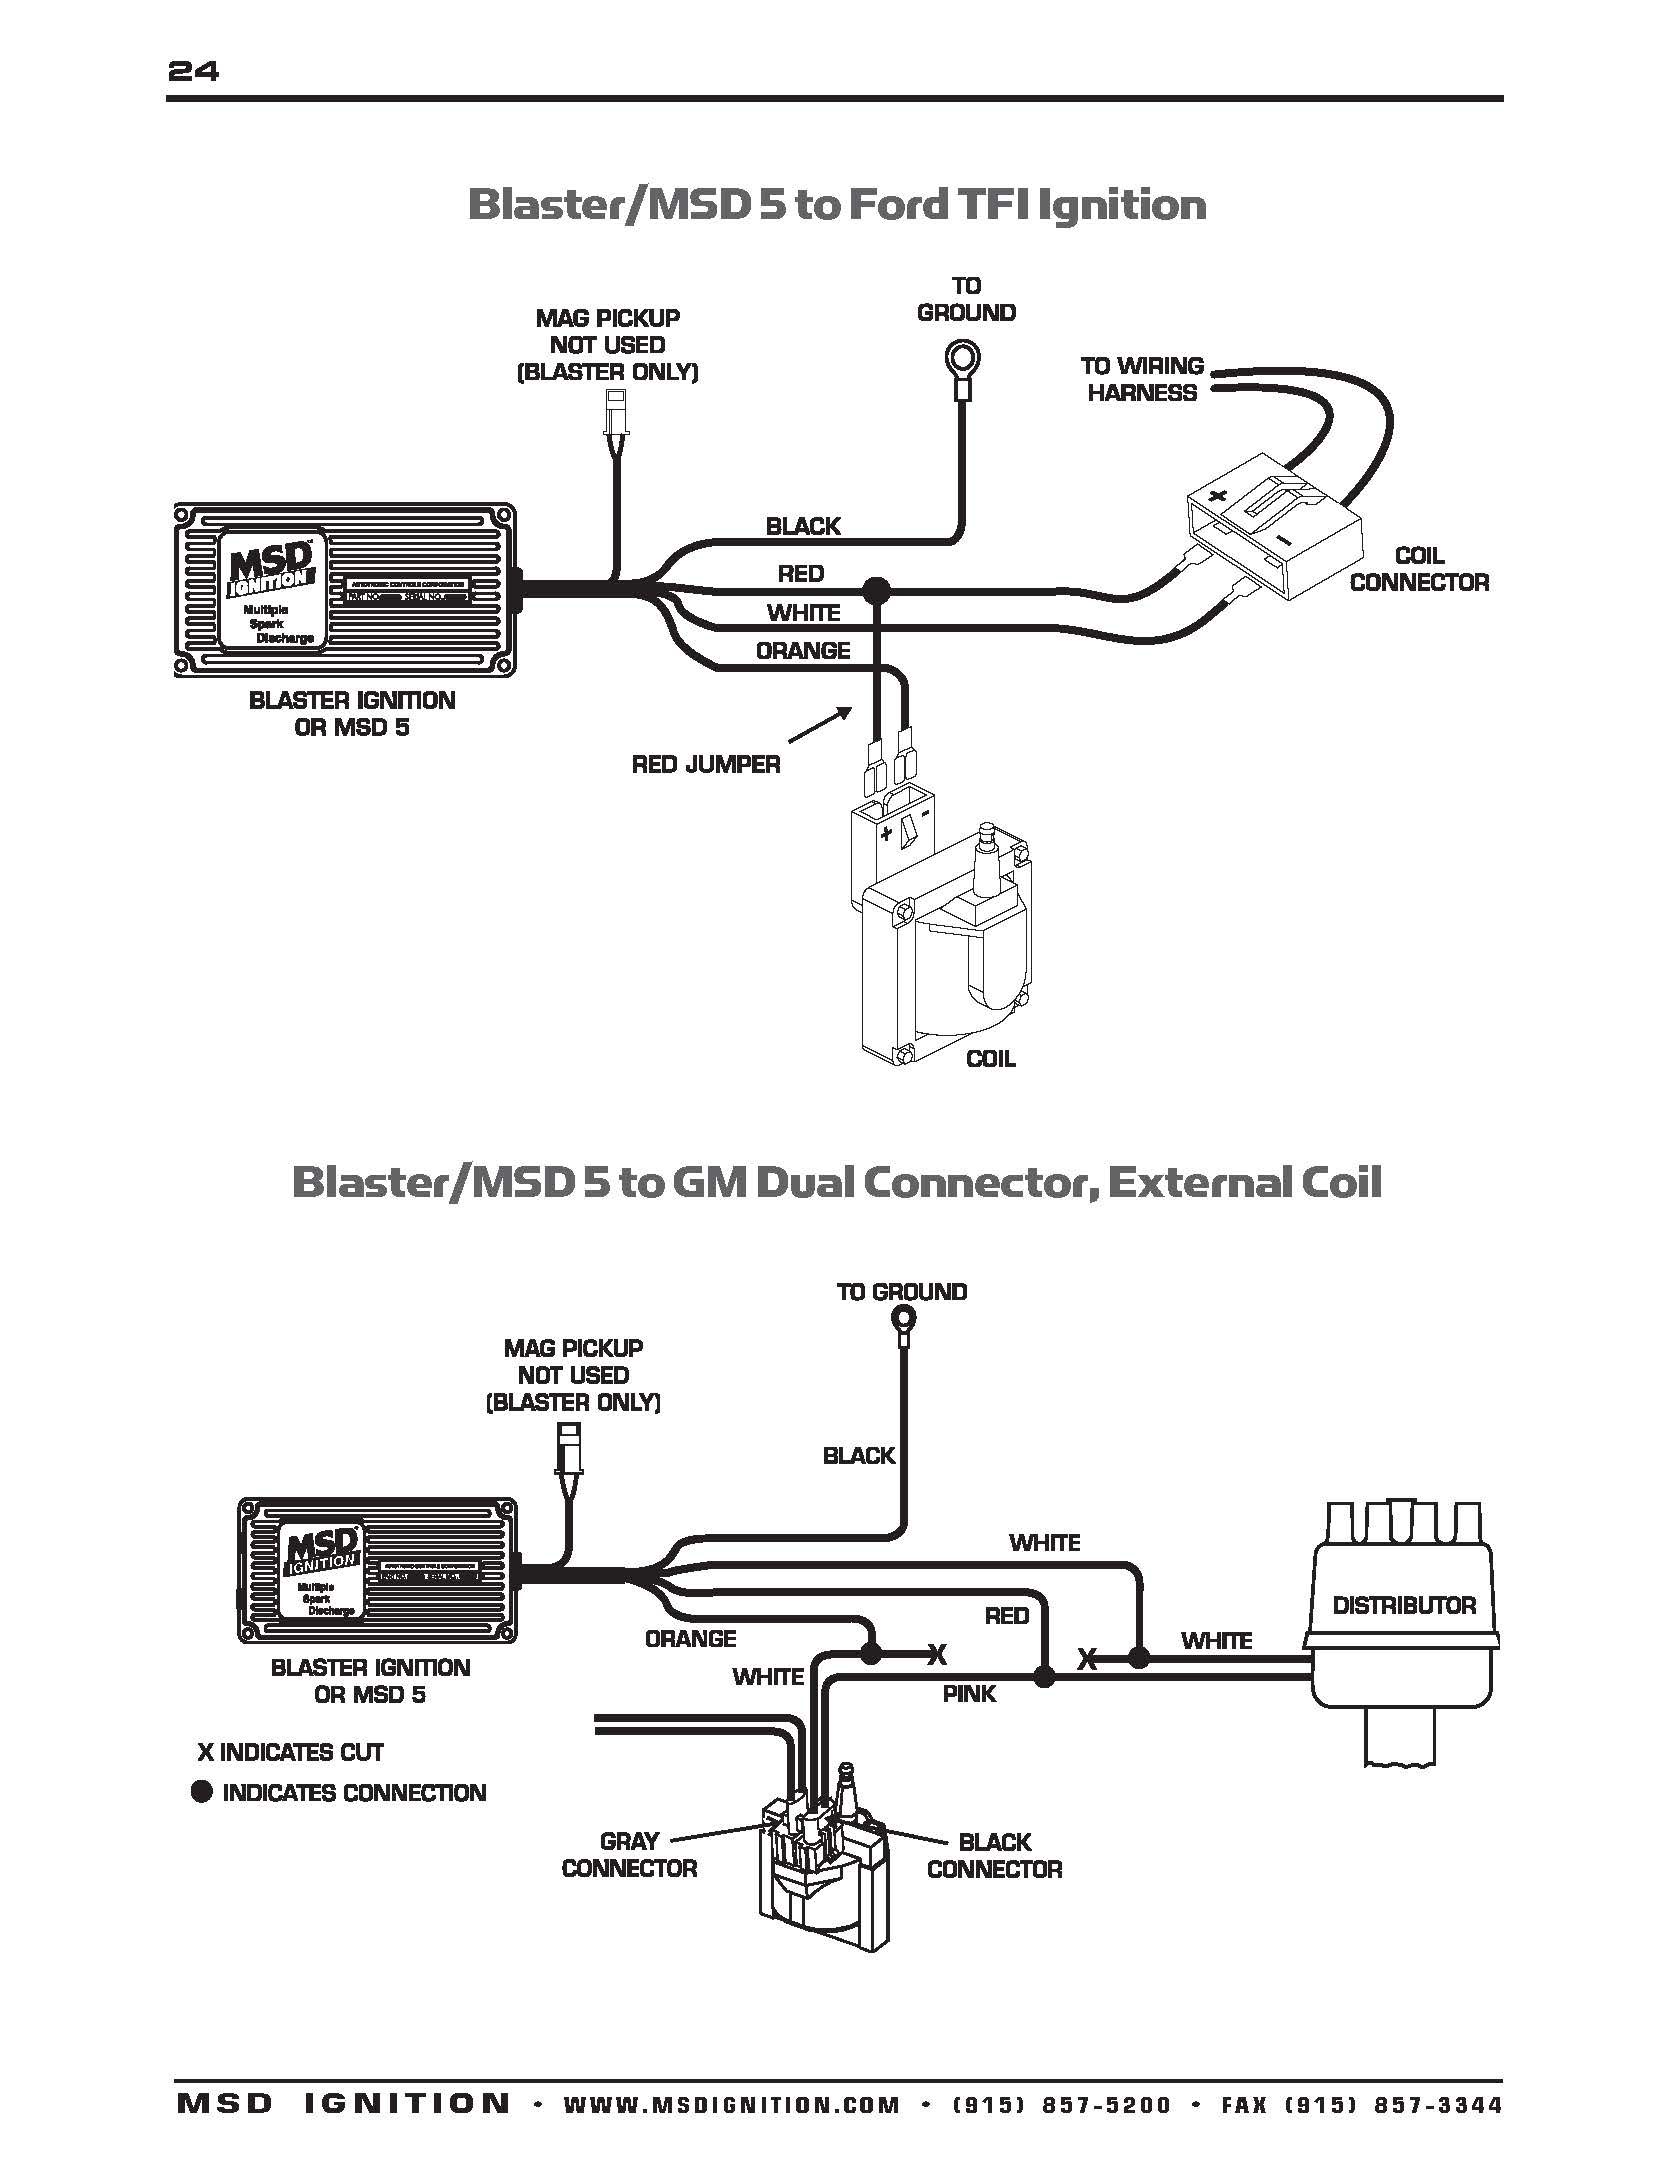 2Wire Distributor Wiring Diagram Msd 6Al Connected To | Wiring Diagram - Msd 6Al Wiring Diagram Ford